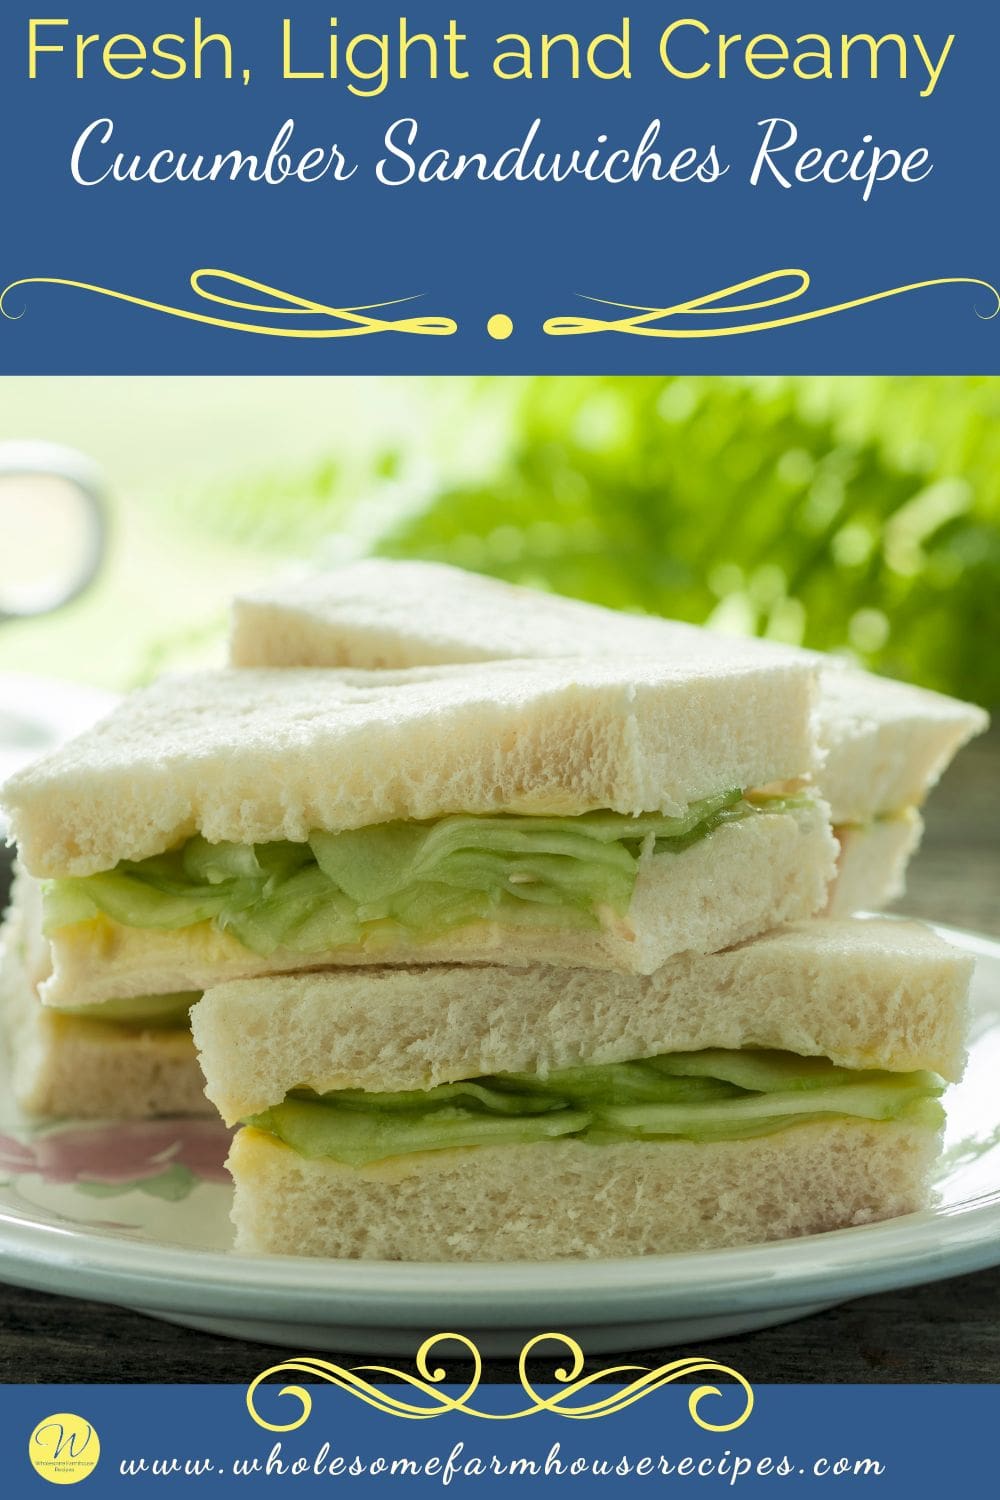 Fresh Light and Creamy Cucumber Sandwiches Recipe